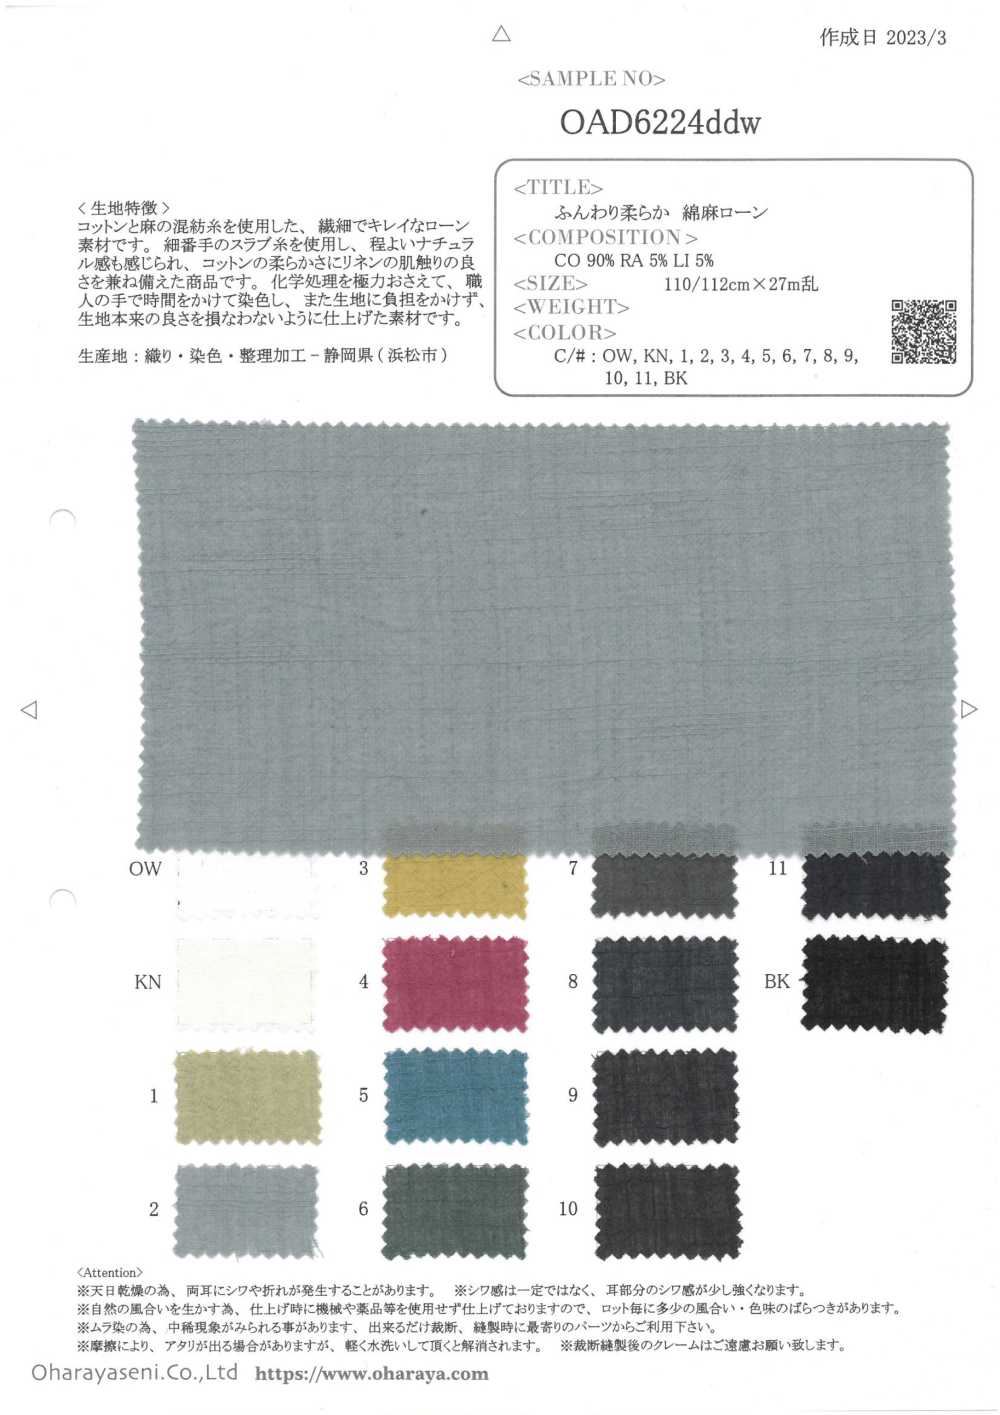 OAD6224DDW Césped De Lino Esponjoso[Fabrica Textil] Oharayaseni